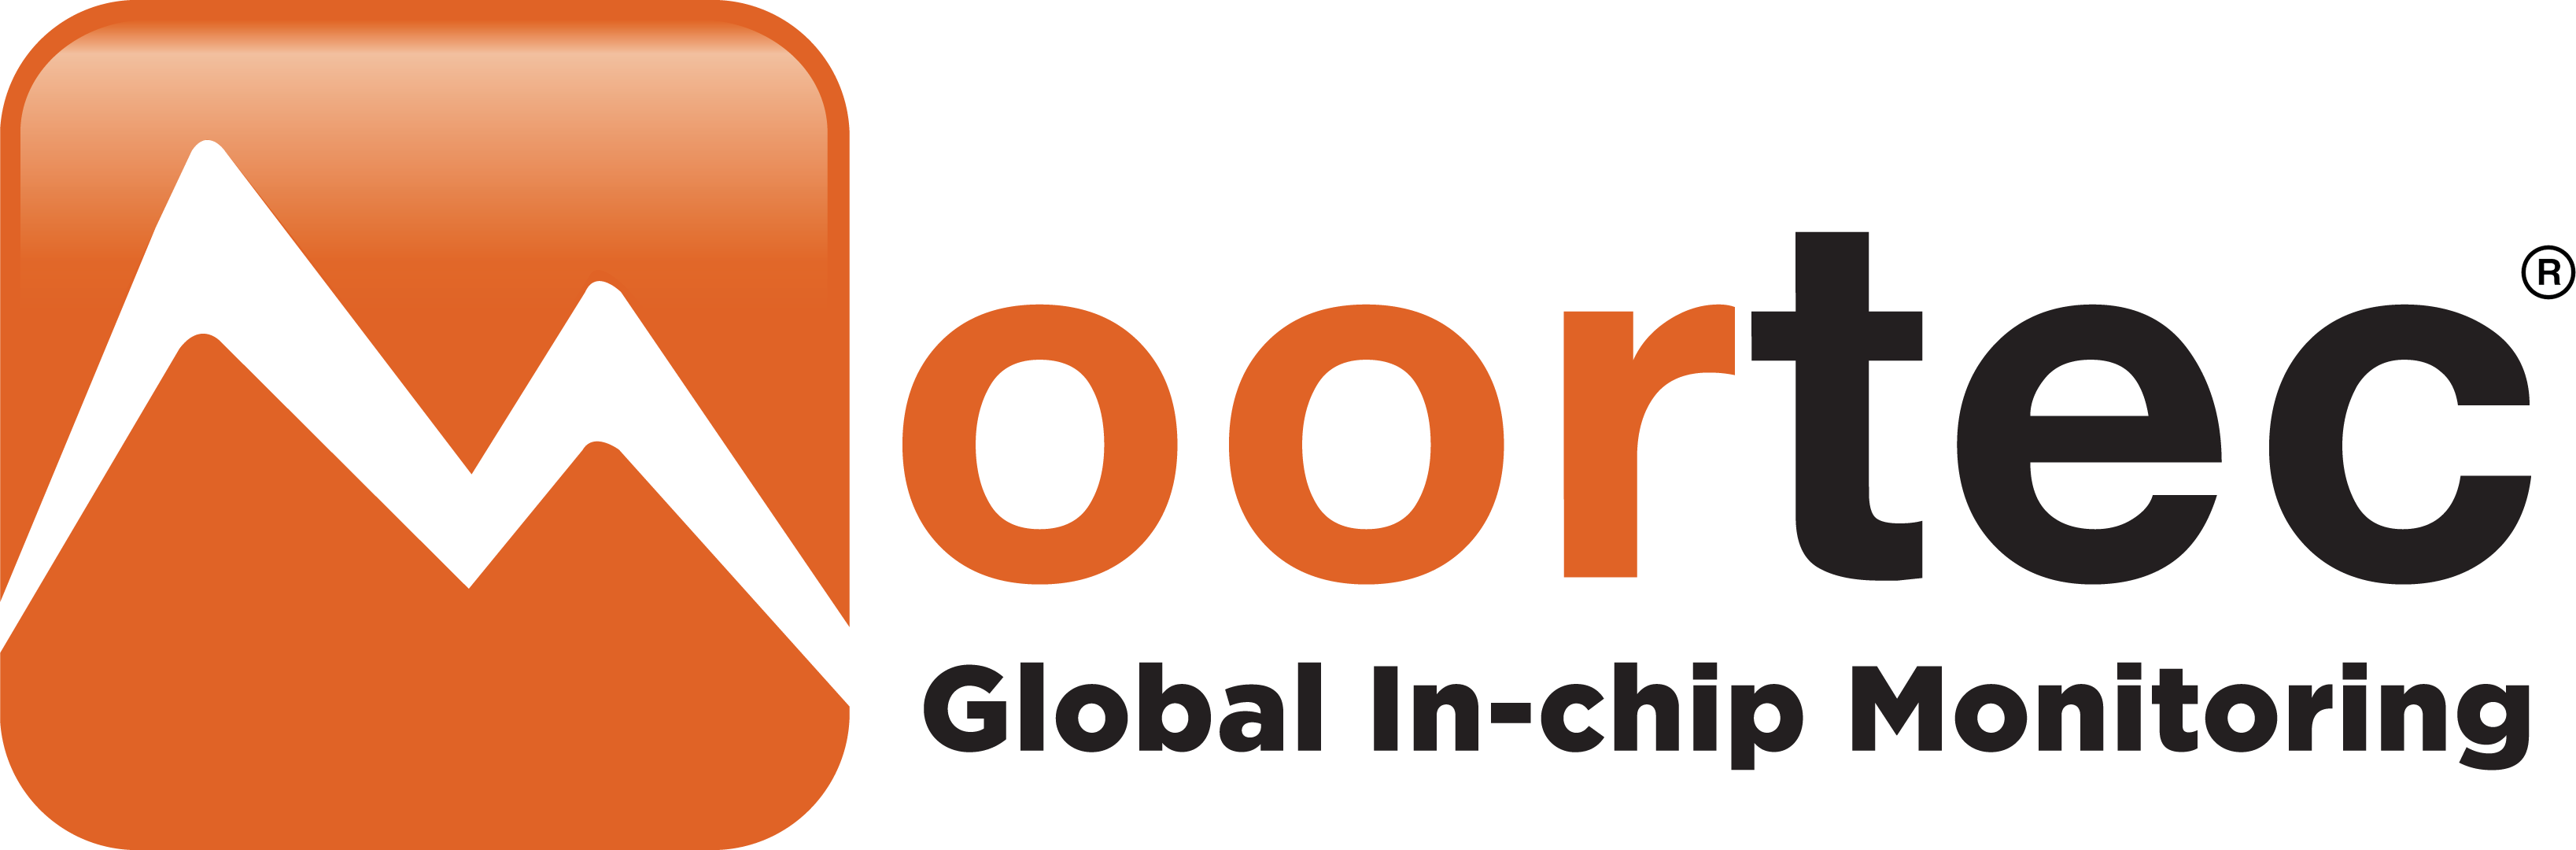 Moortec logo